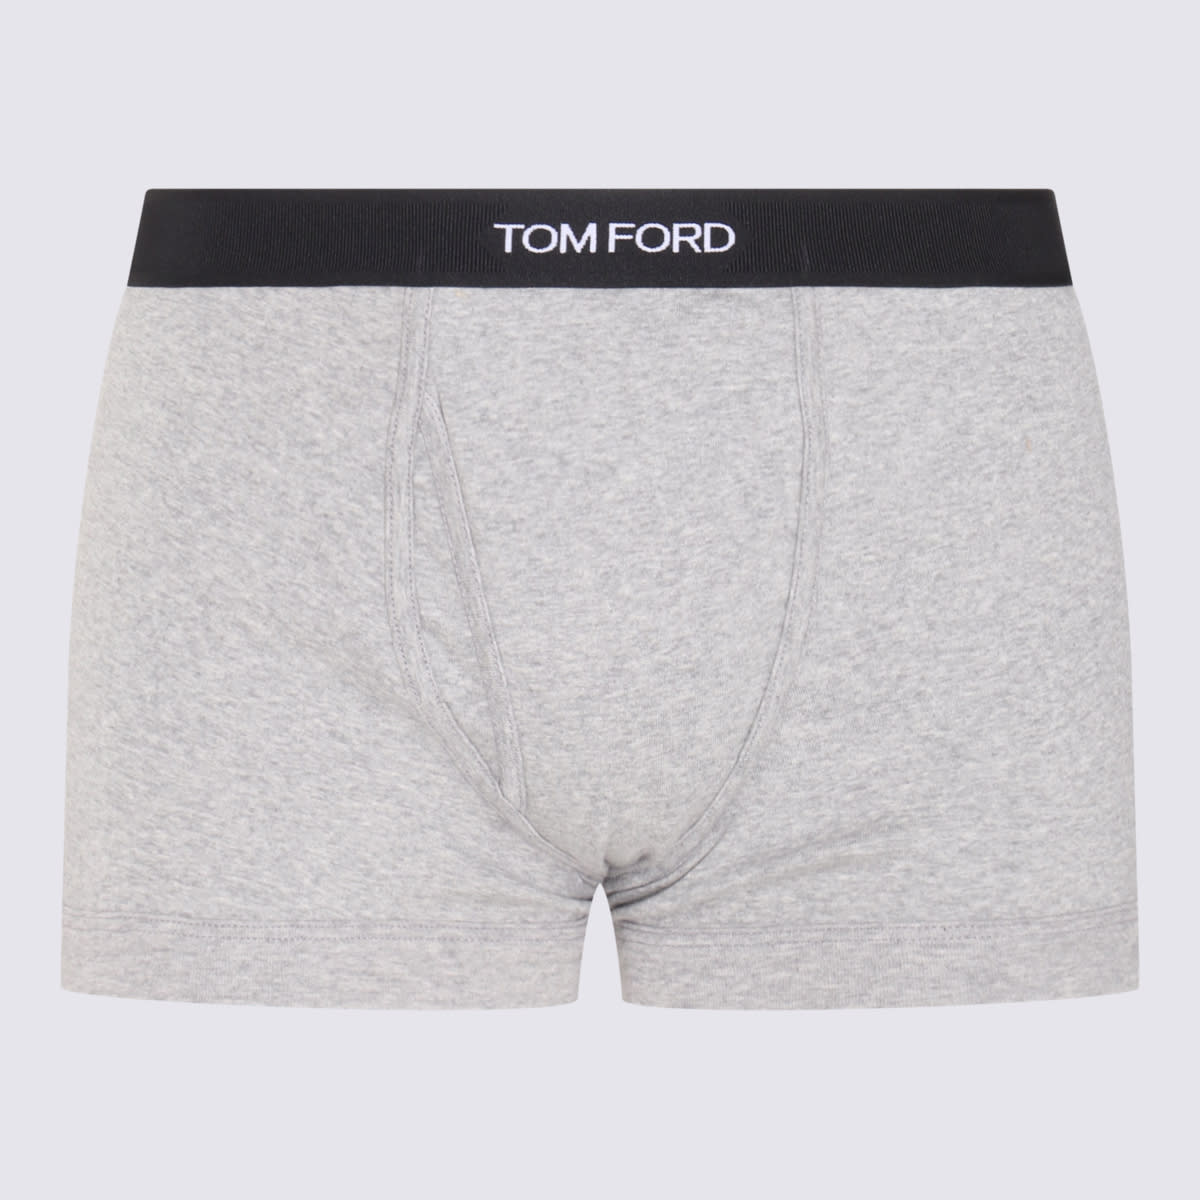 Tom Ford Grey Cotton Blend Boxer